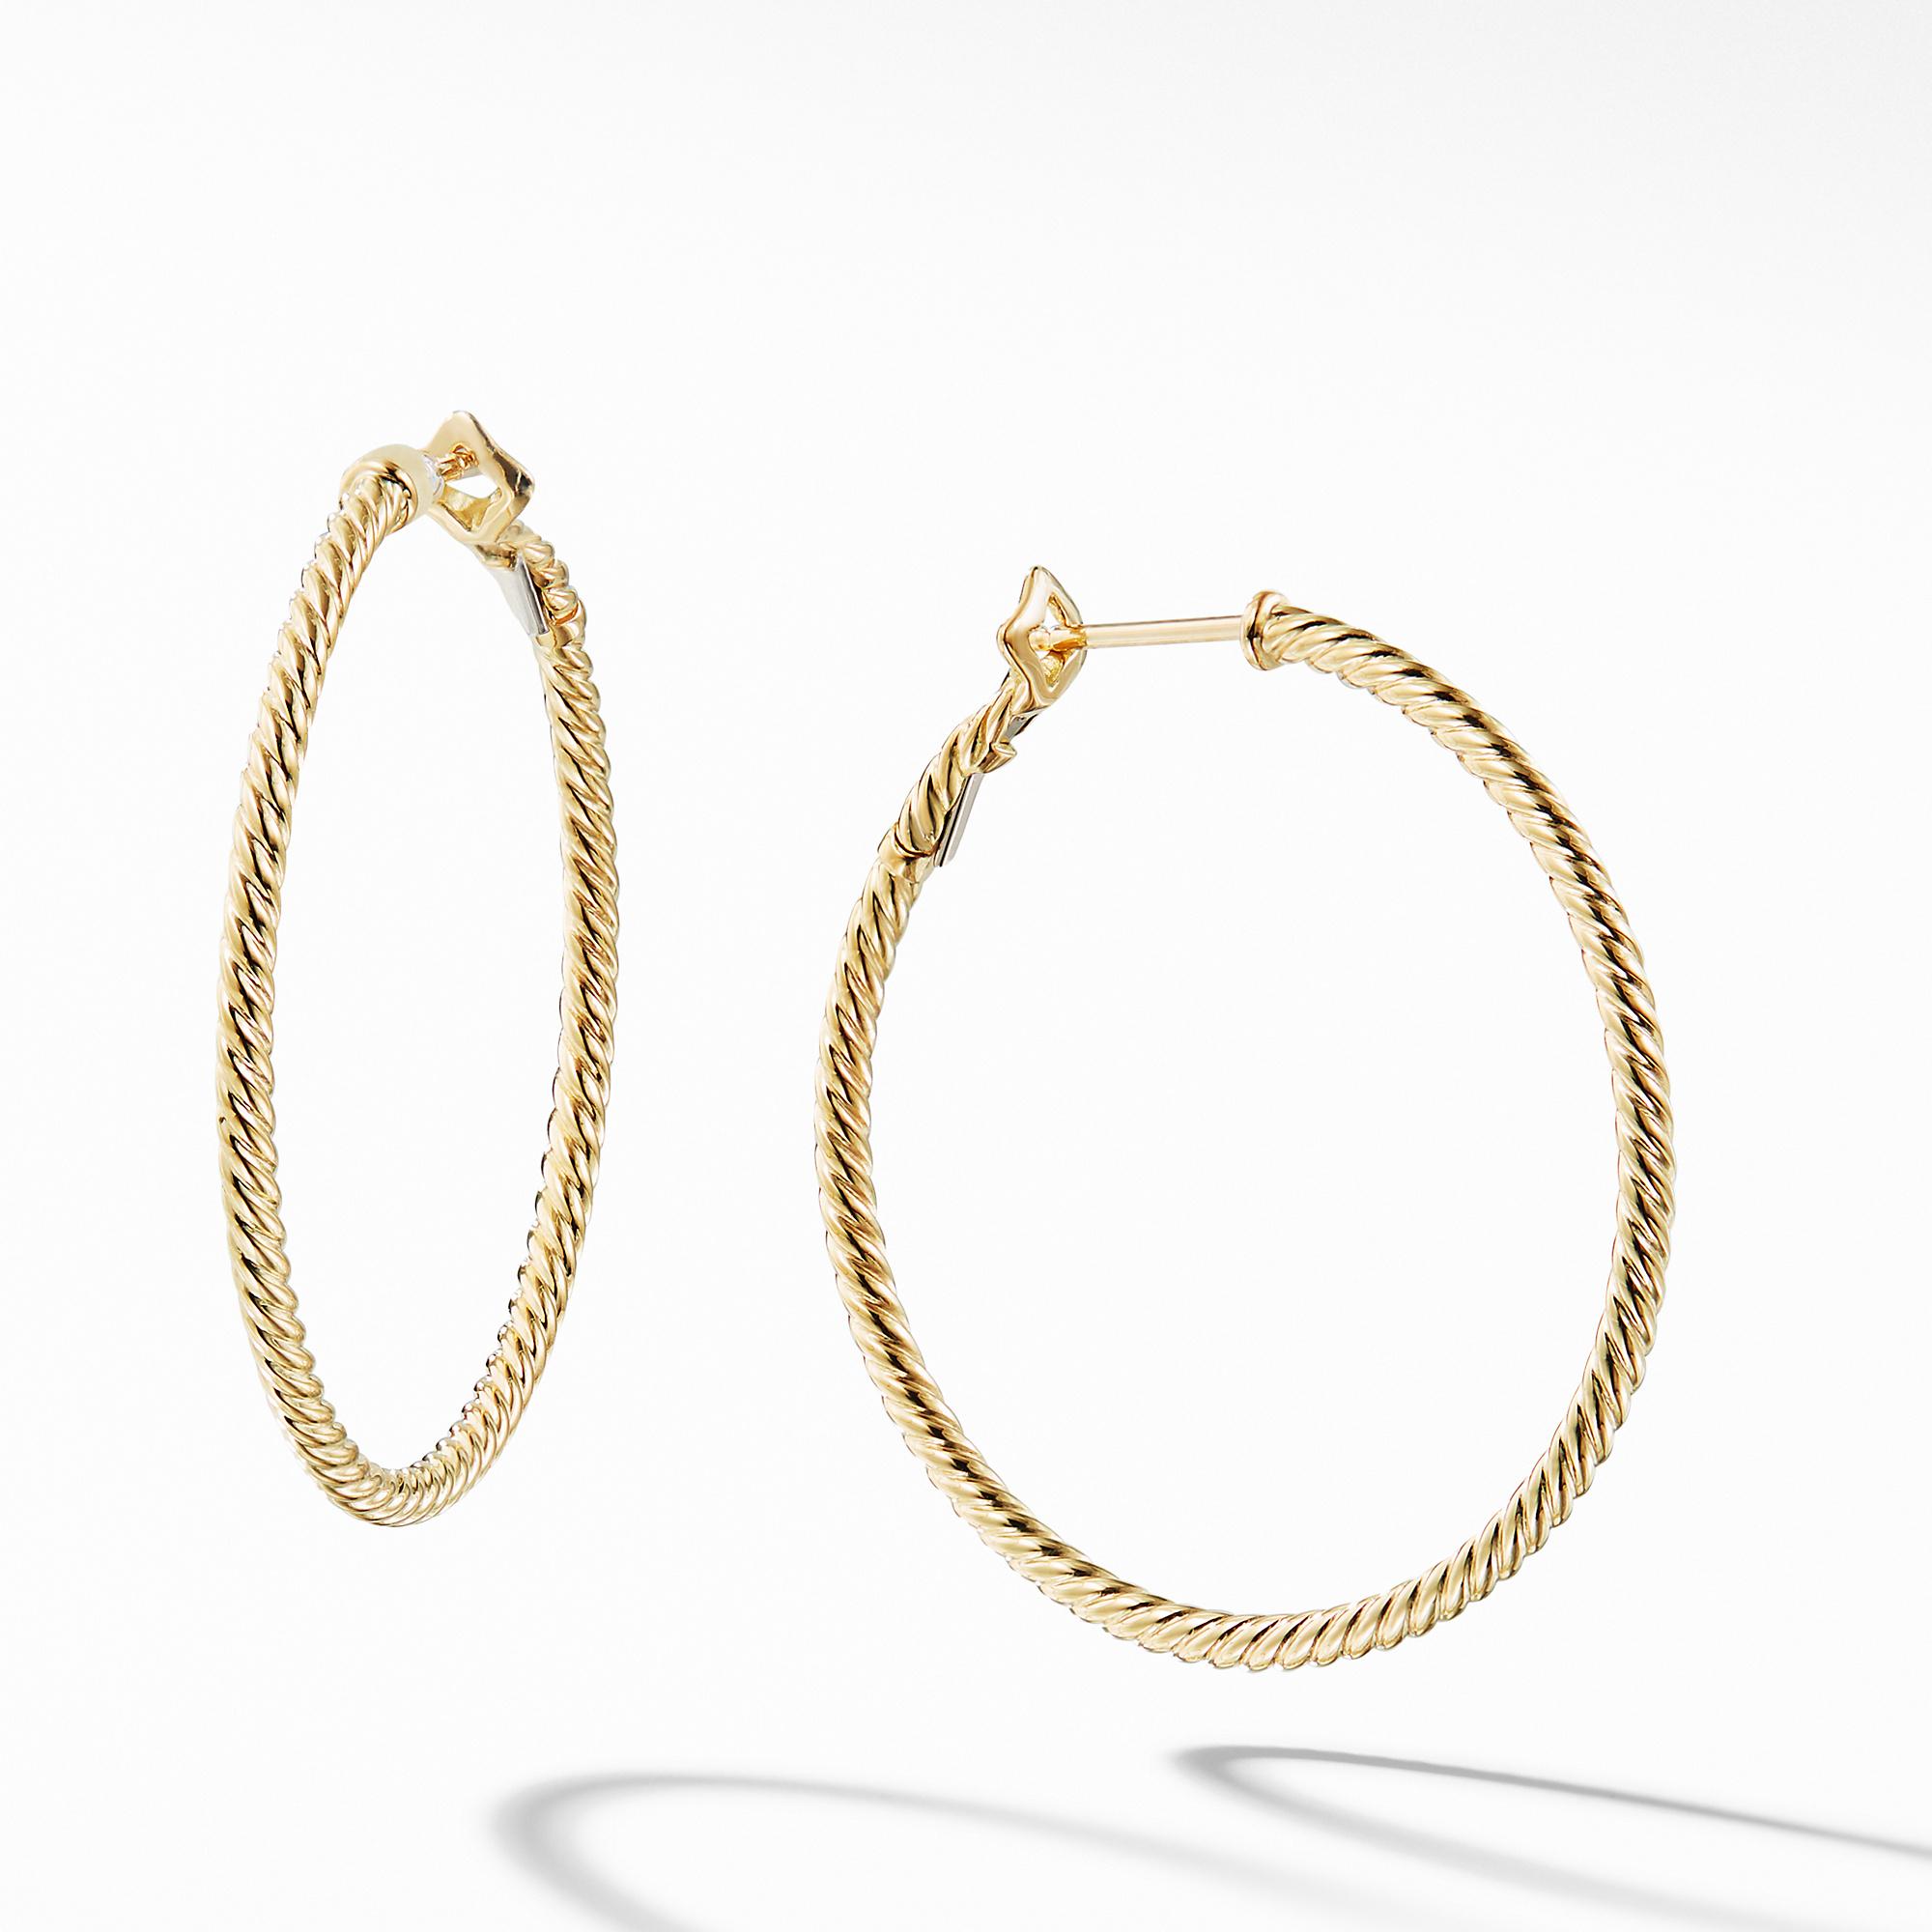 David Yurman Cable Classics Hoop Earrings in Gold, 1.25